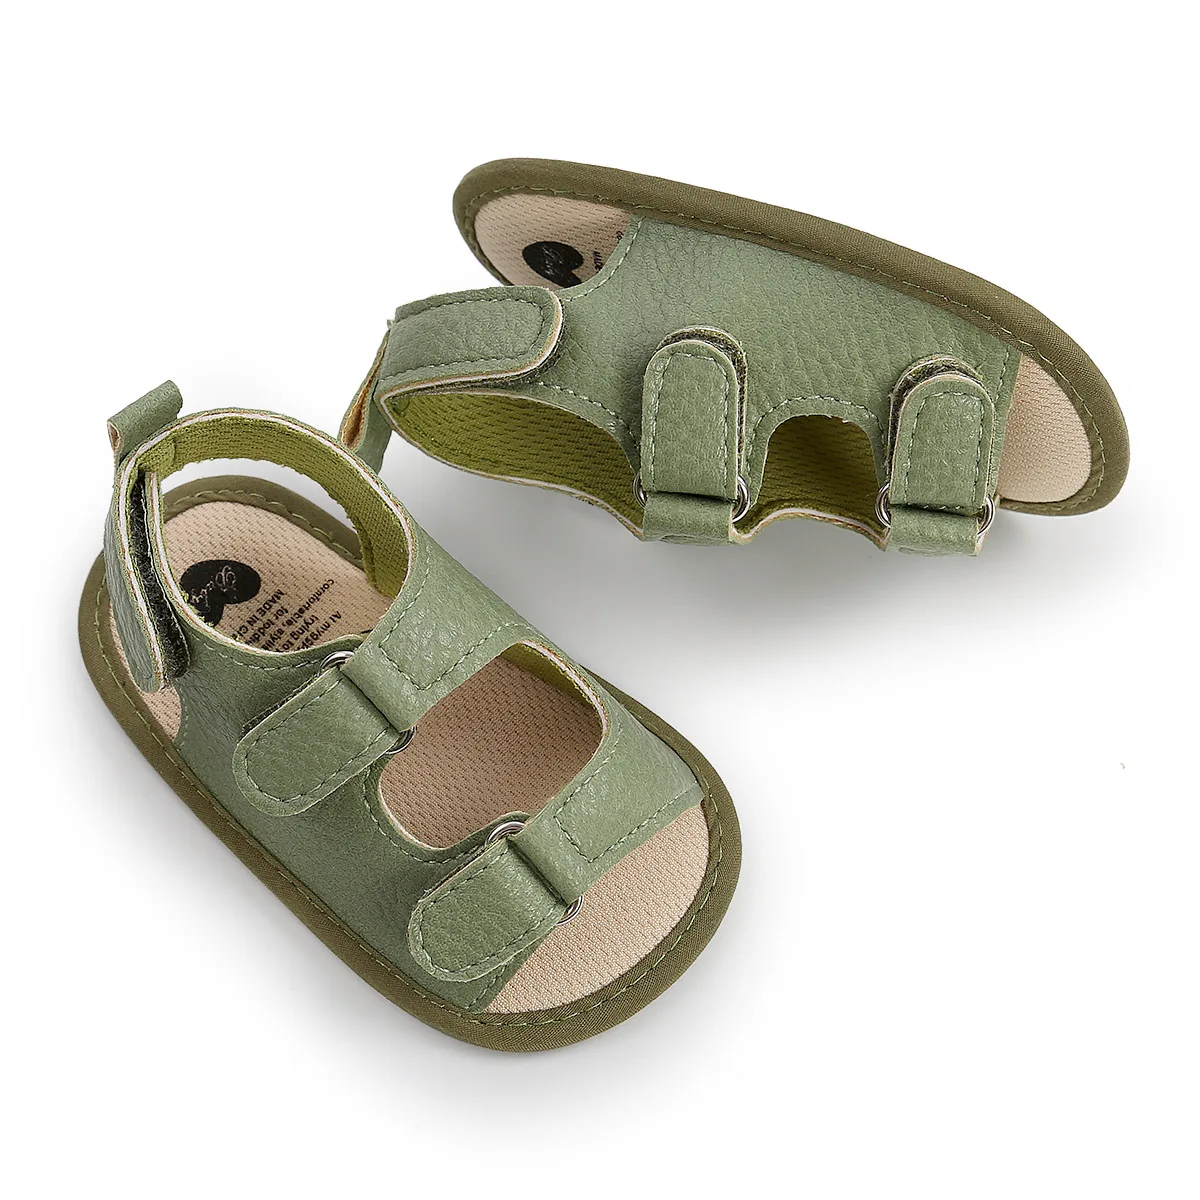 NEW 0-18Months Kids Newborn Baby Boys Fashion Summer Soft Crib Shoes First Walker Anti Slip Sandals Shoes Soft Sole